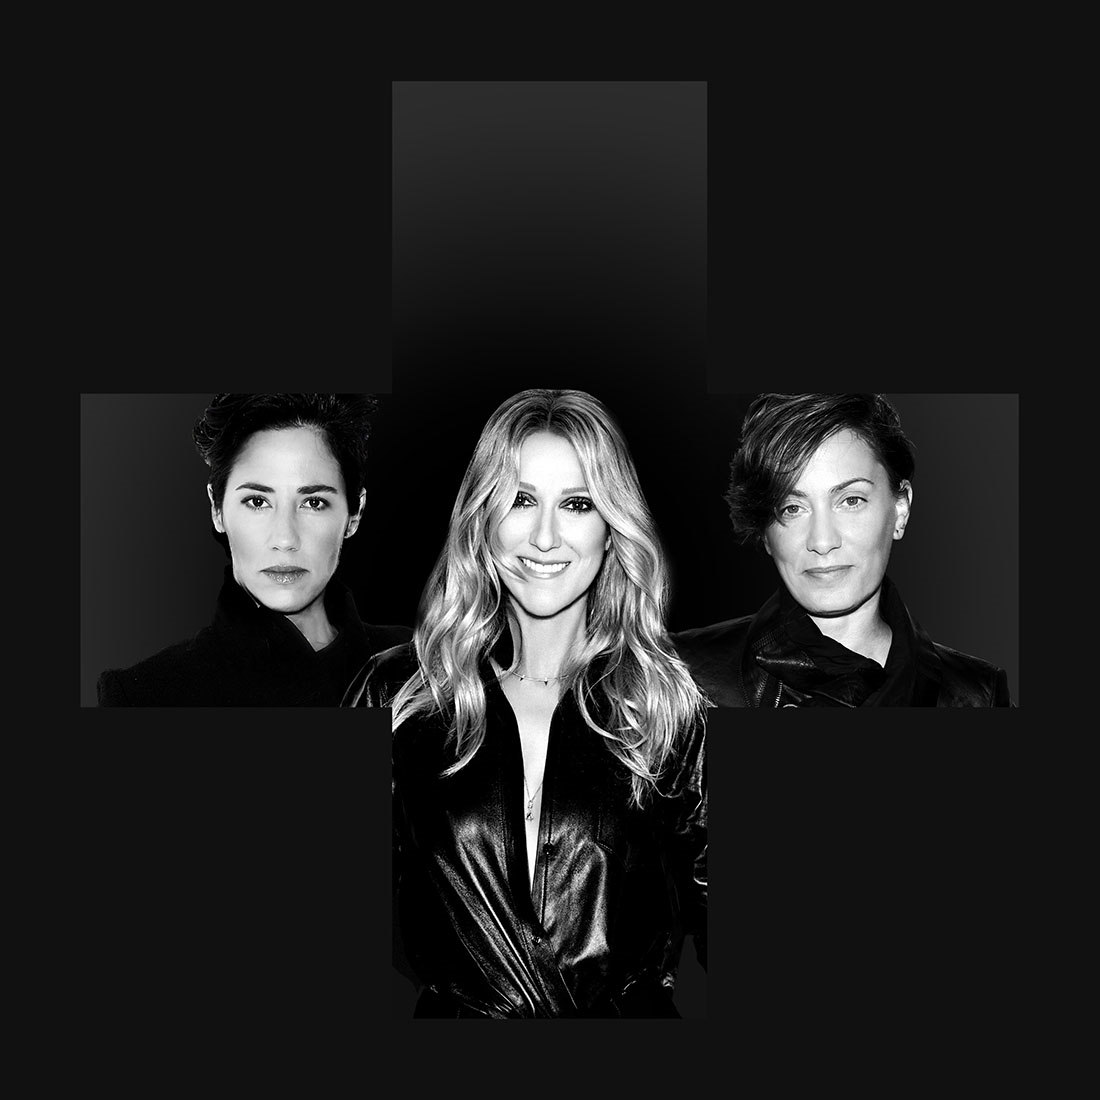 H Céline Dion με τις συνεταίρους της και σχεδιάστριες του brand nununu, Iris Adler και Tali Milchberg - Photo: celinununu.com